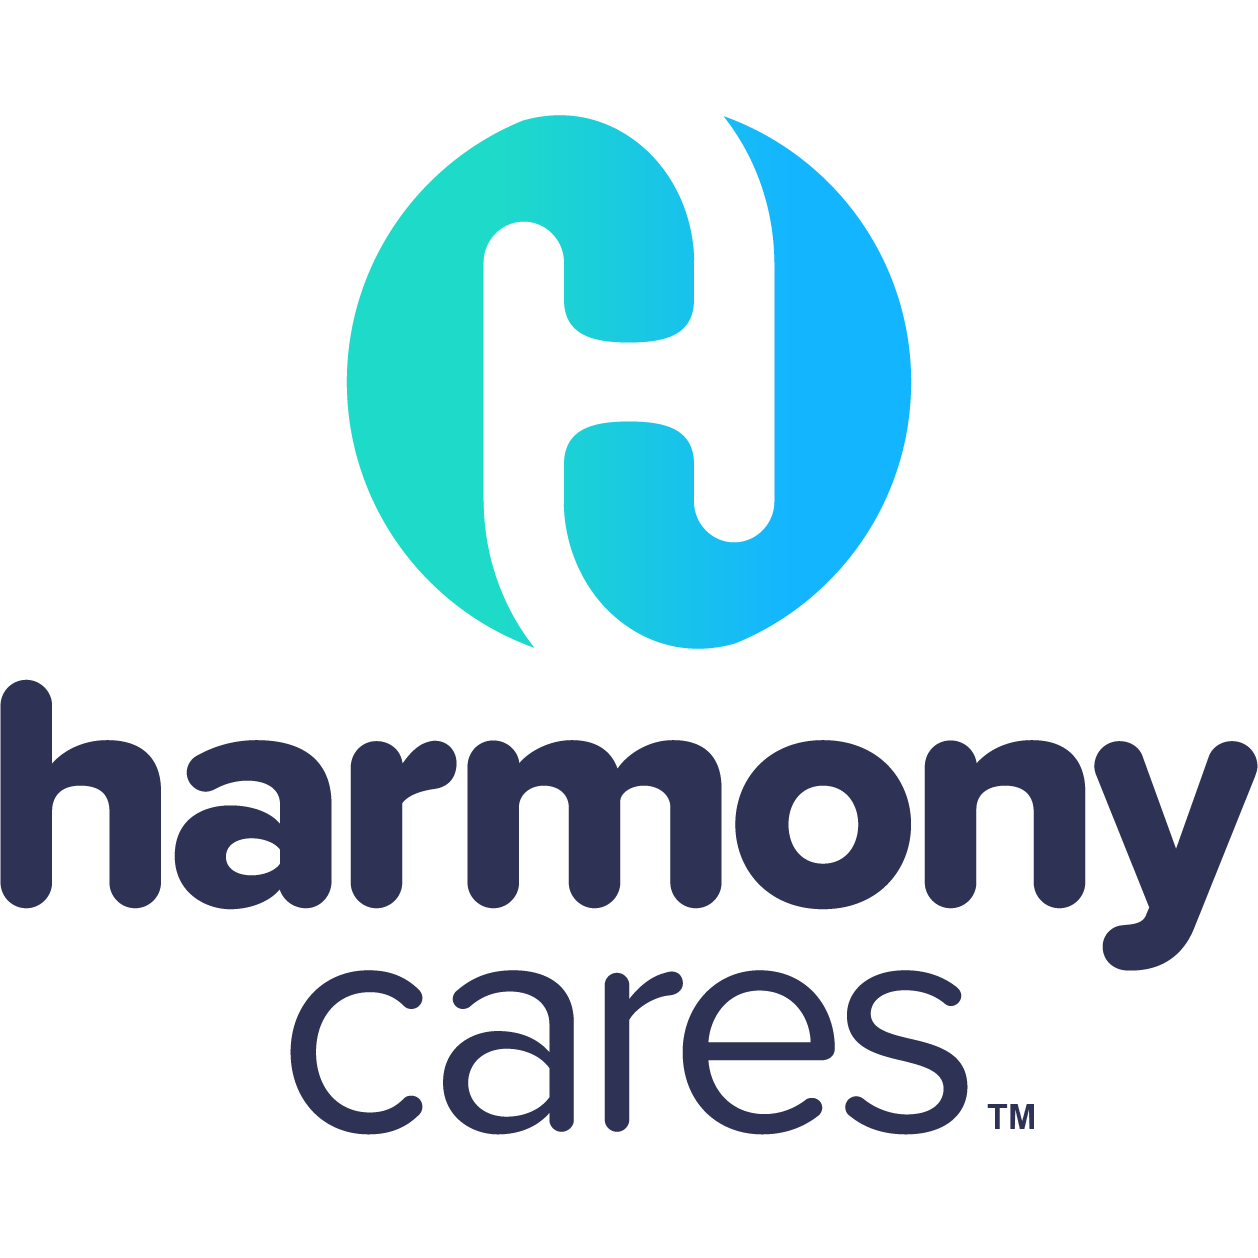 HarmonyCares Medical Group - Tampa, FL 33637 - (813)517-0137 | ShowMeLocal.com